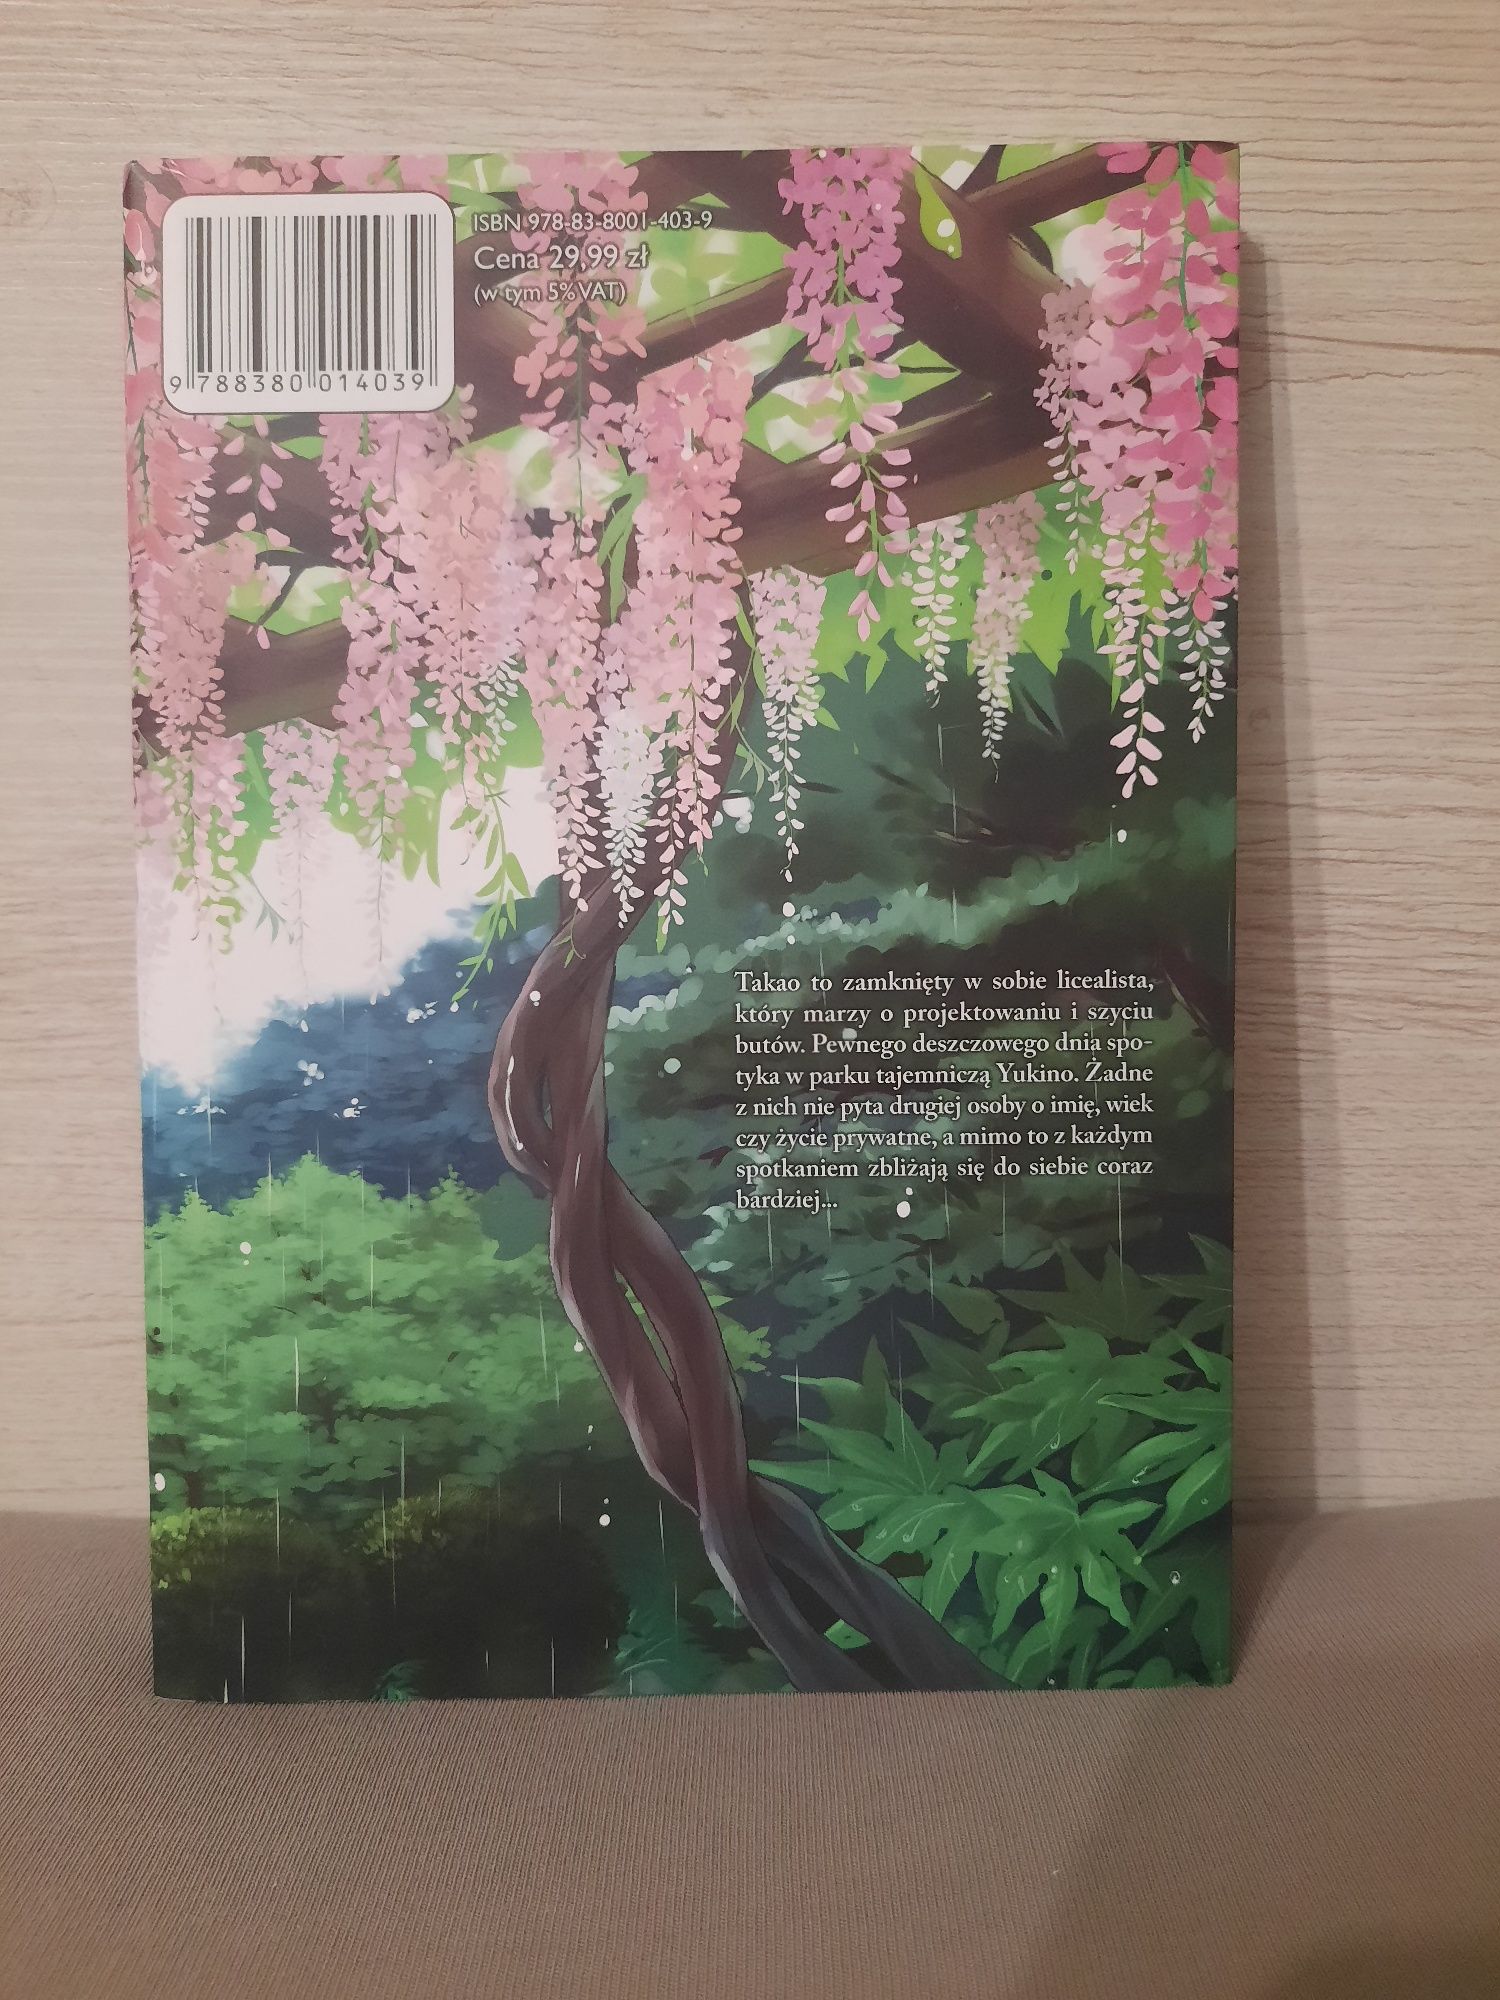 Ogród Słów manga. Makoto Shinkai